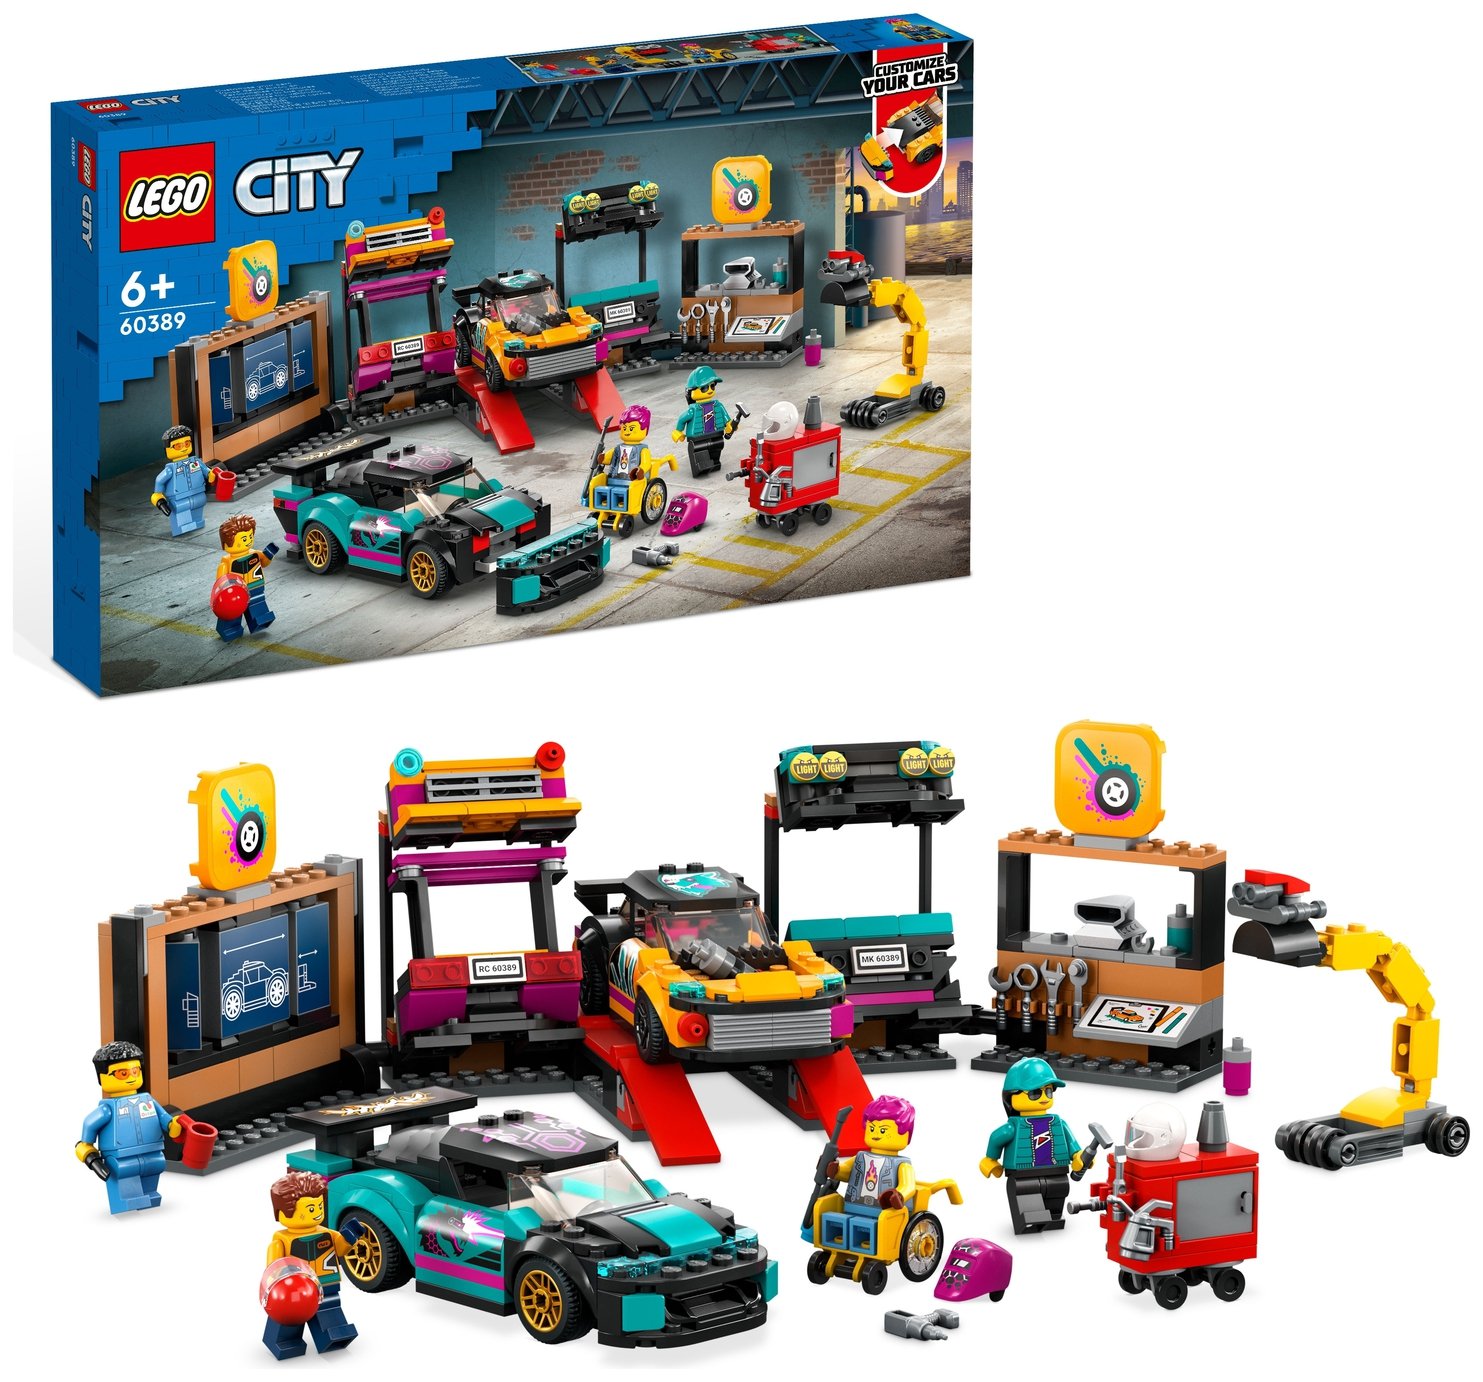 LEGO City Custom Car Garage Toy, Kids' Workshop Set 60389